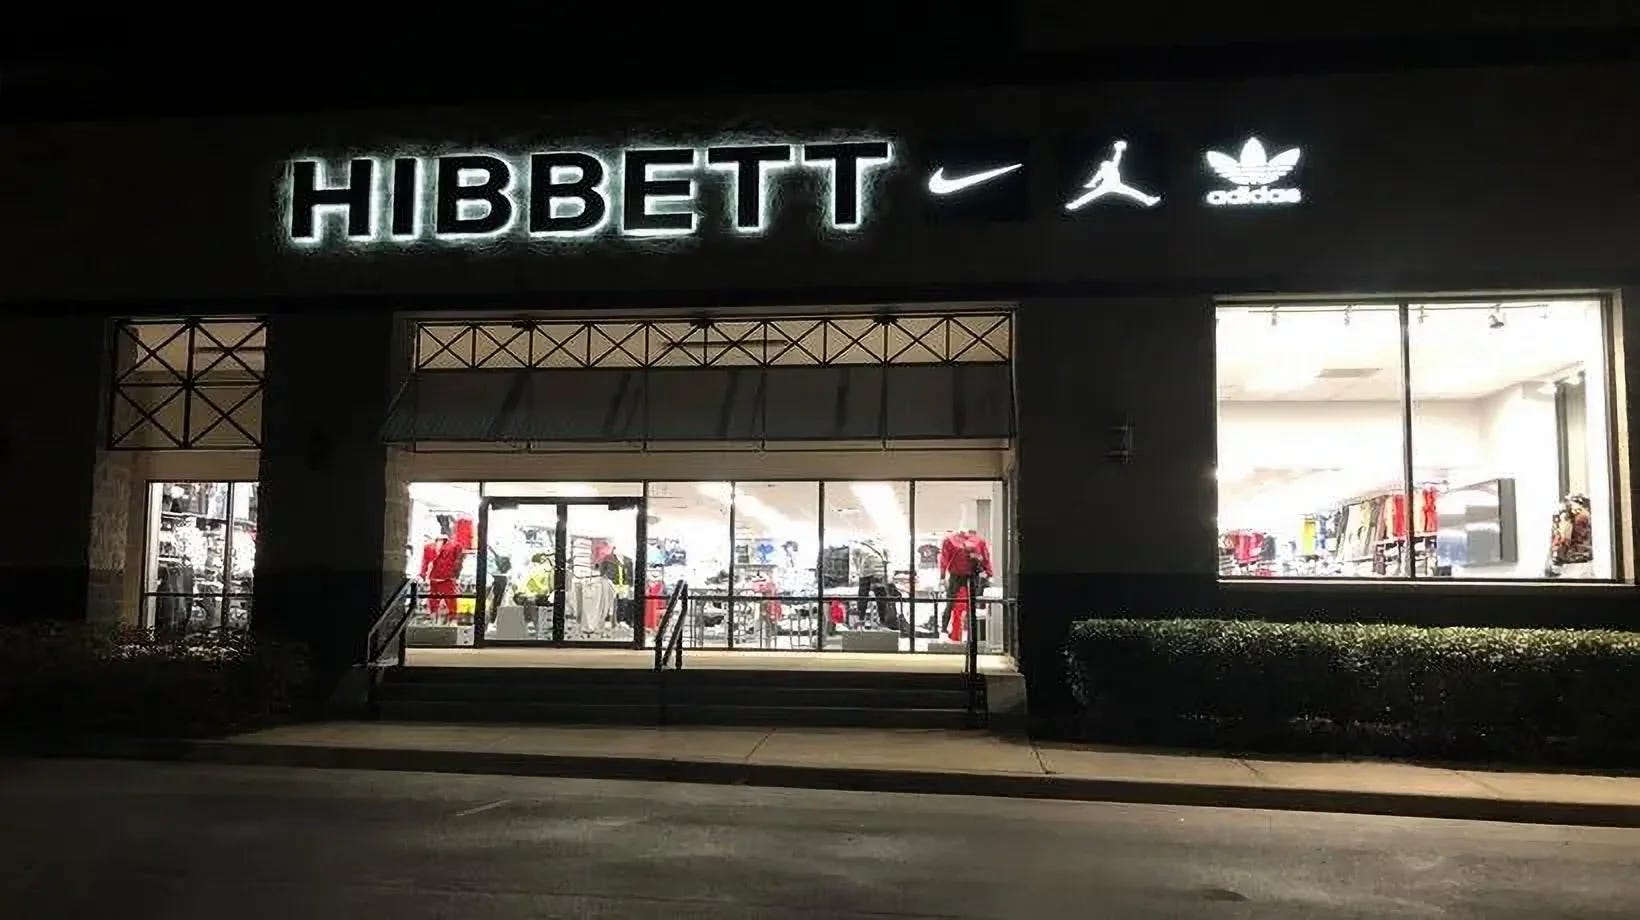 Hibbett  City Gear : Our History